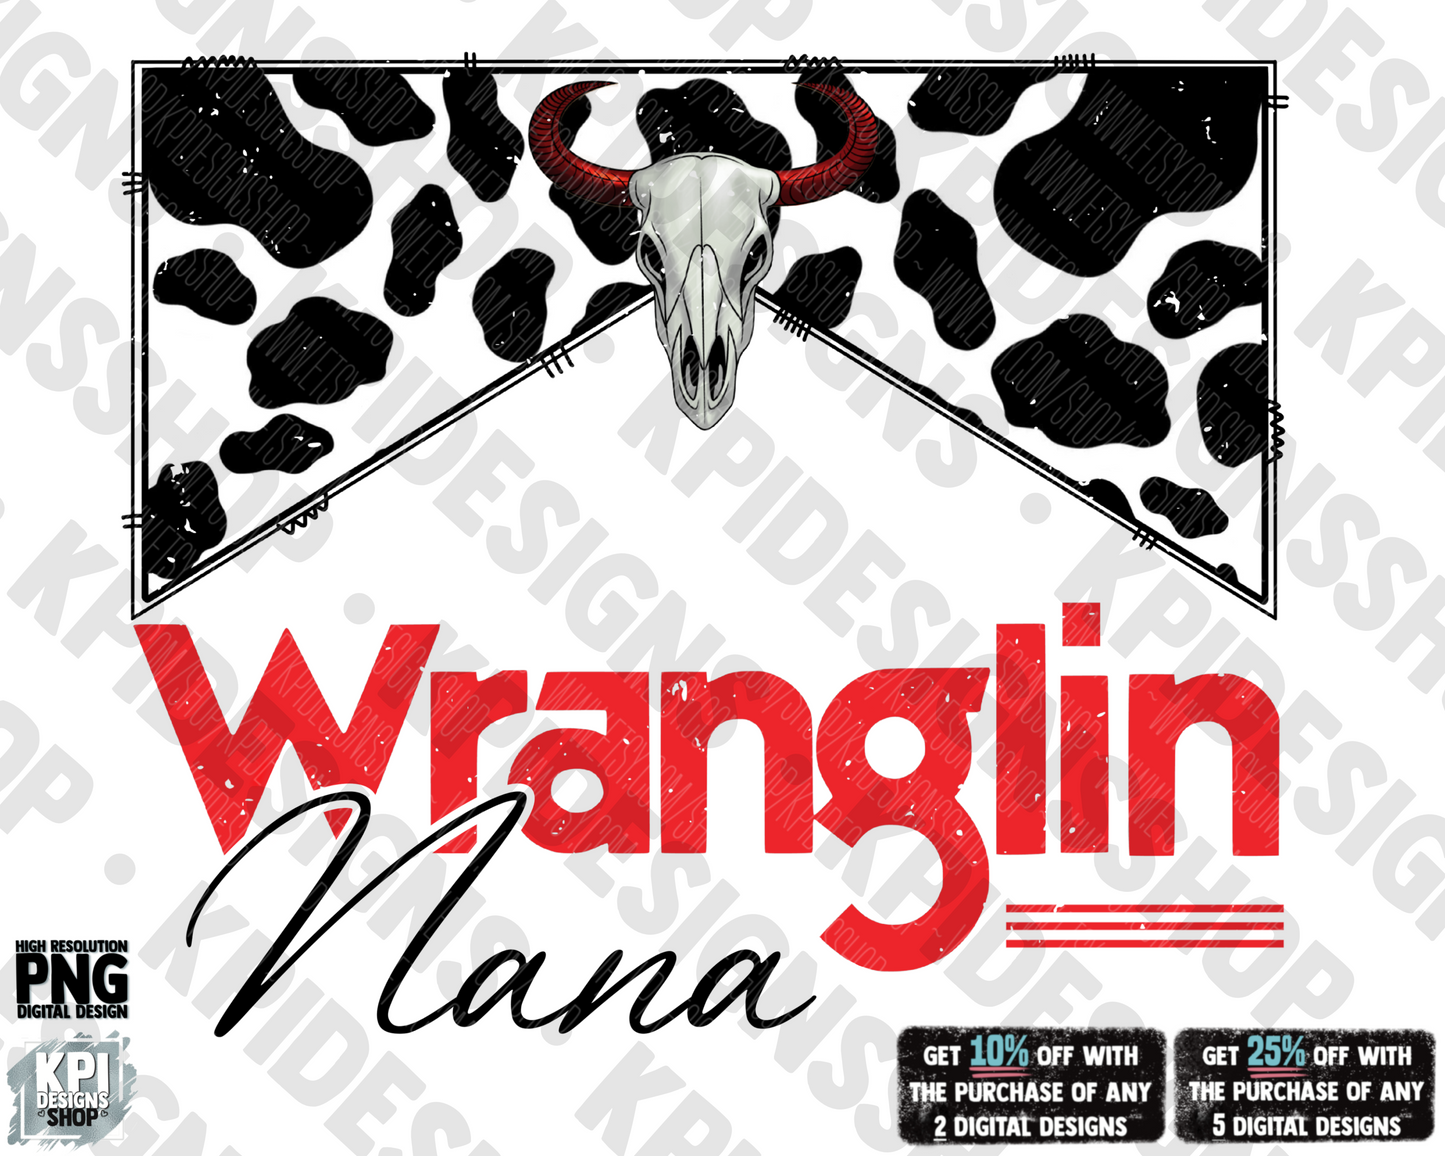 Wranglin Bundle (Aunt, Auntie, Woman, Girl, Mini, Mimi, Nana, Sister, Wifey)  - PNG - Digital Design